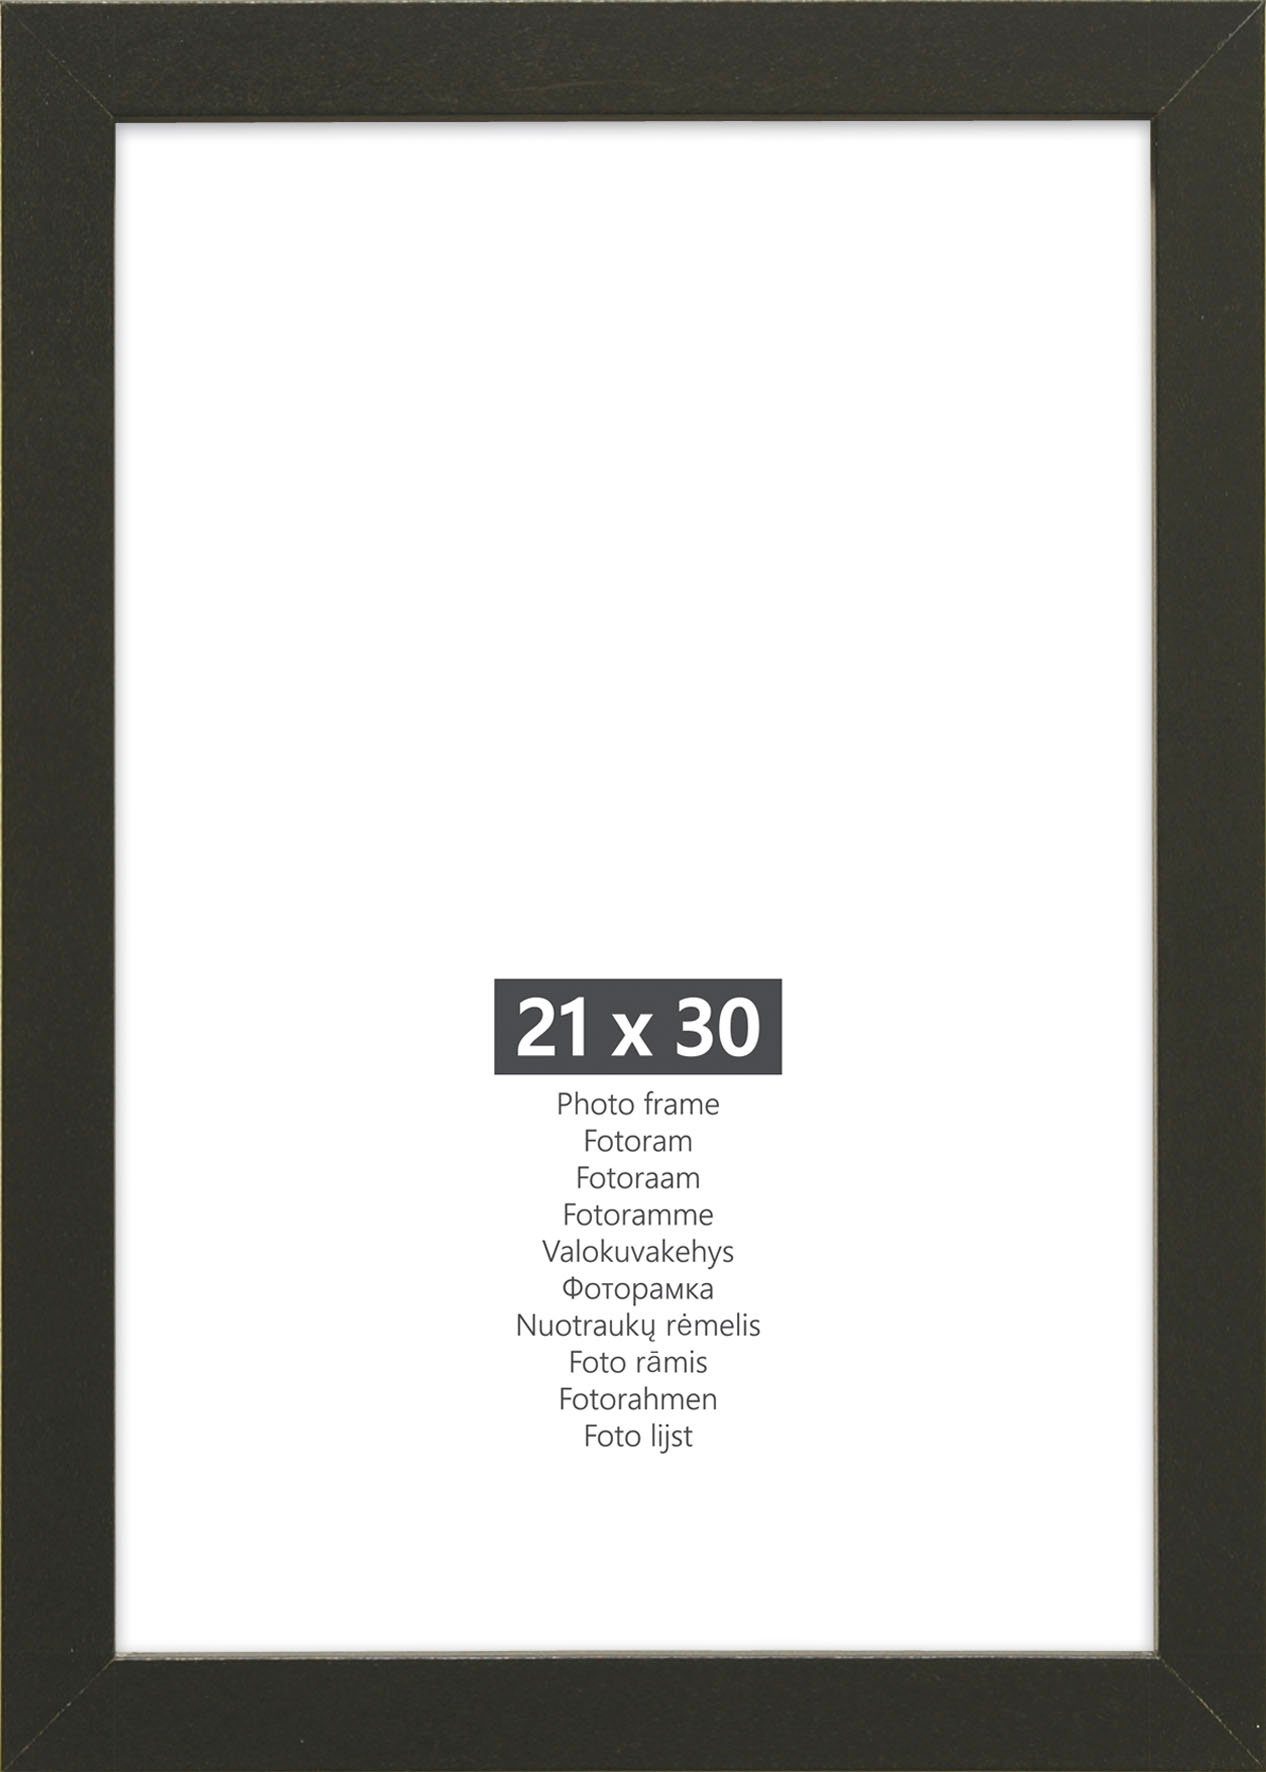 St), 10er, 13x18 2x + cm Bilderrahmen 10 (DIN 21x30 andas 2x 2x 4x (DIN A4) Schwarz + Bilderrahmen-Set A5) 10x15 15x20 (Set, +